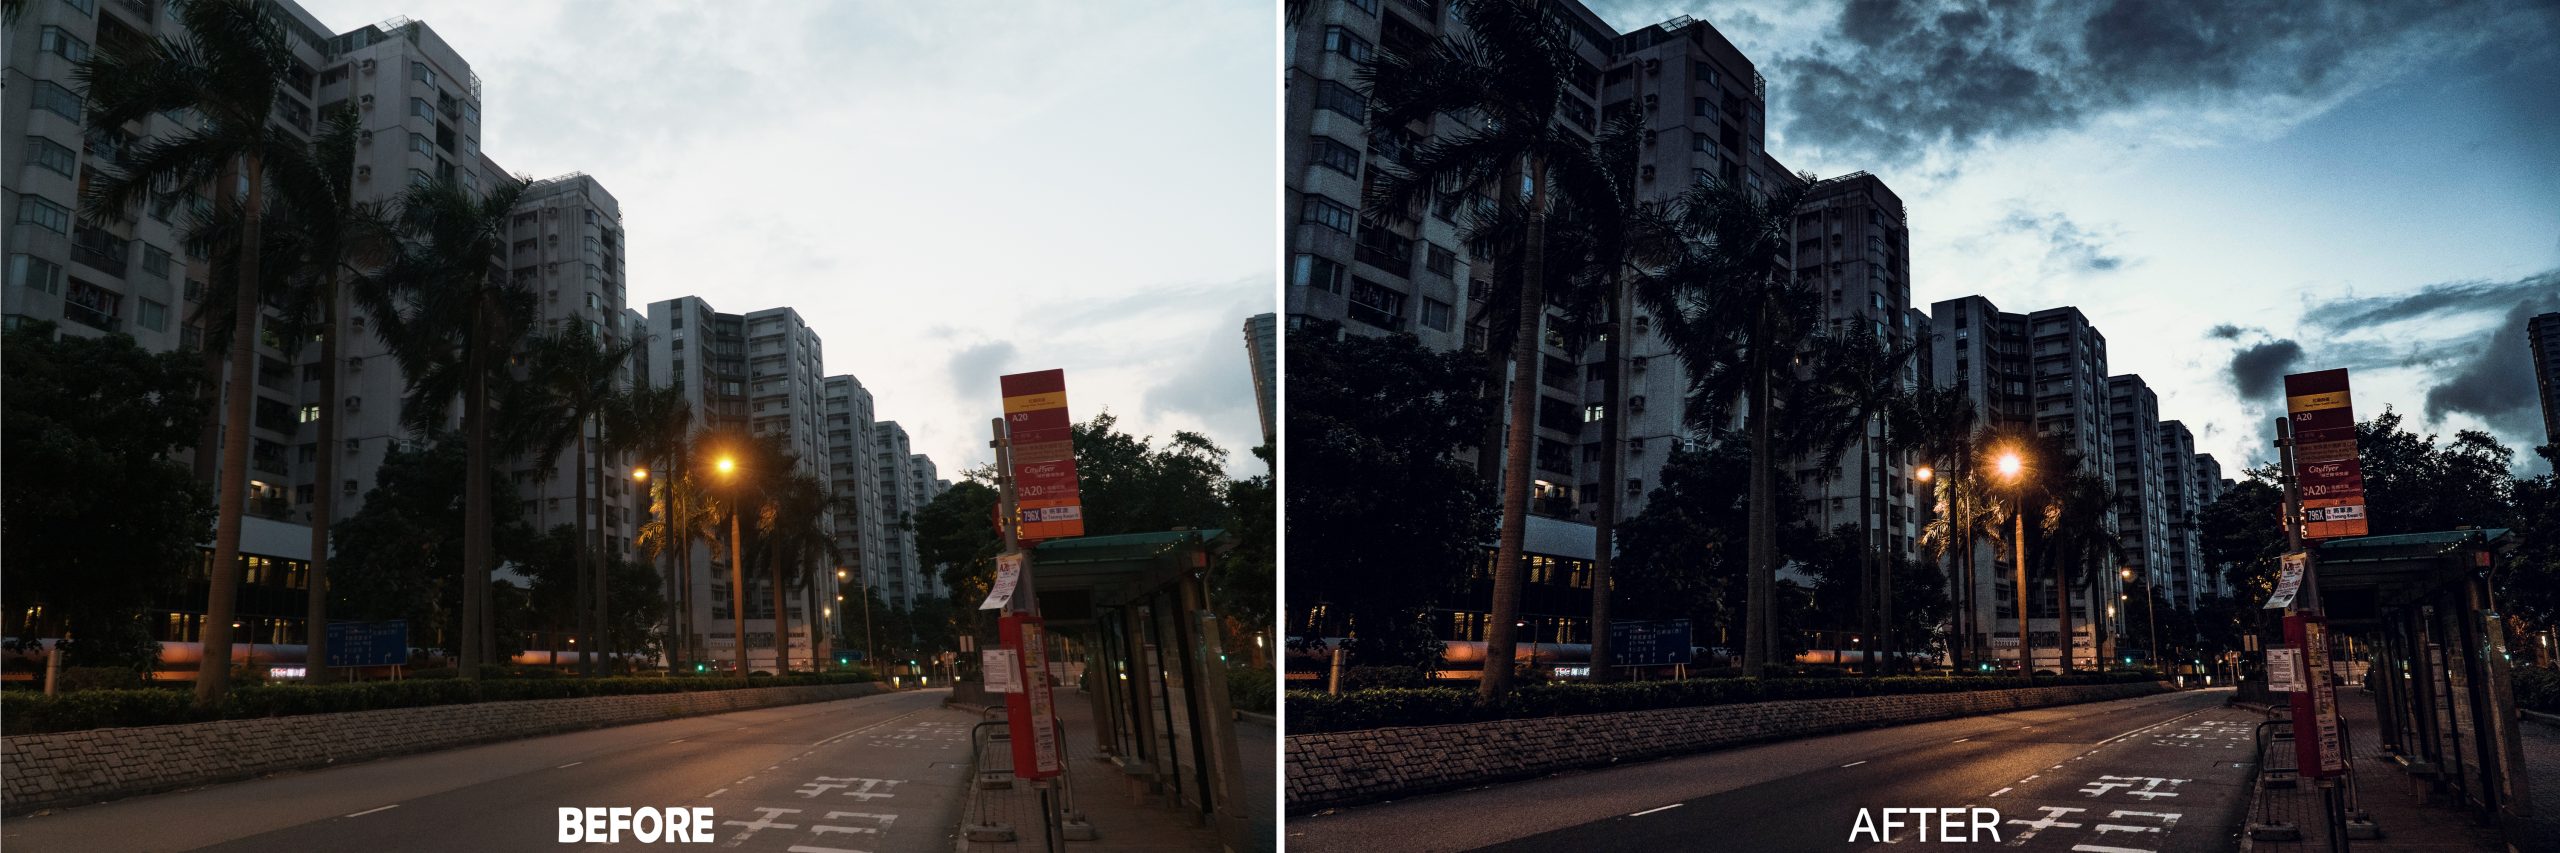 street photography presets, lightroom preset, taiwan street photography, travel photography